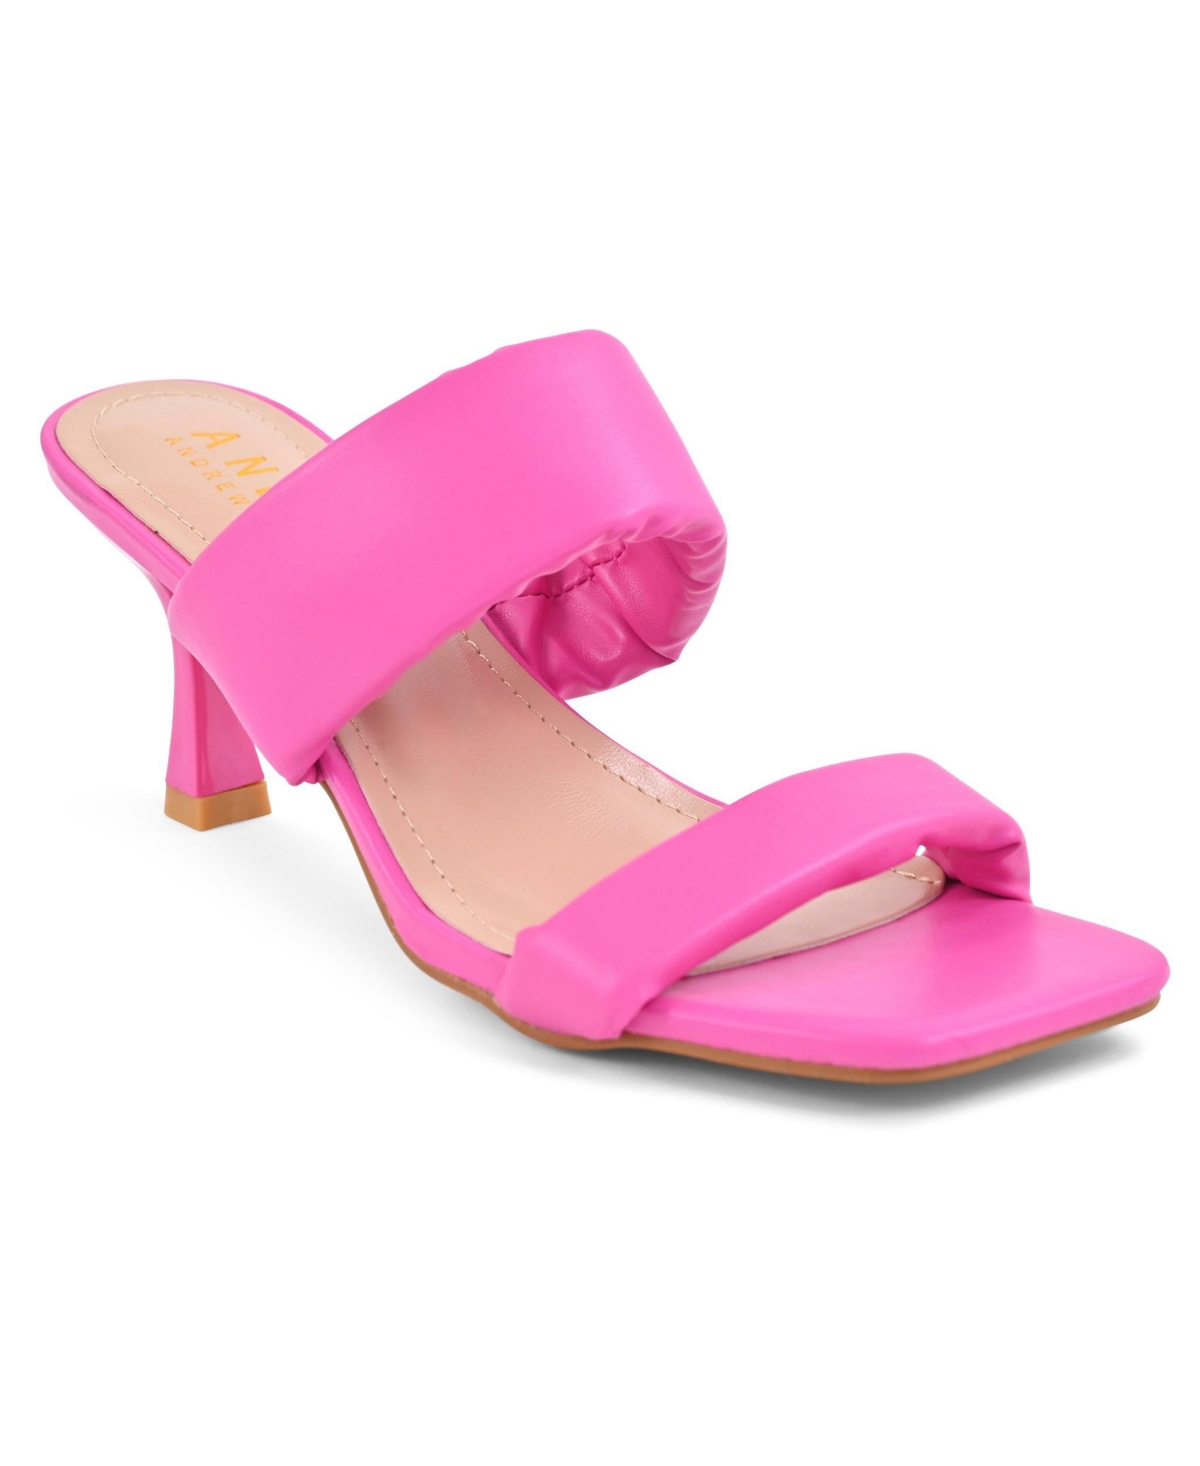 Women's Cora Sandals - Hot pink